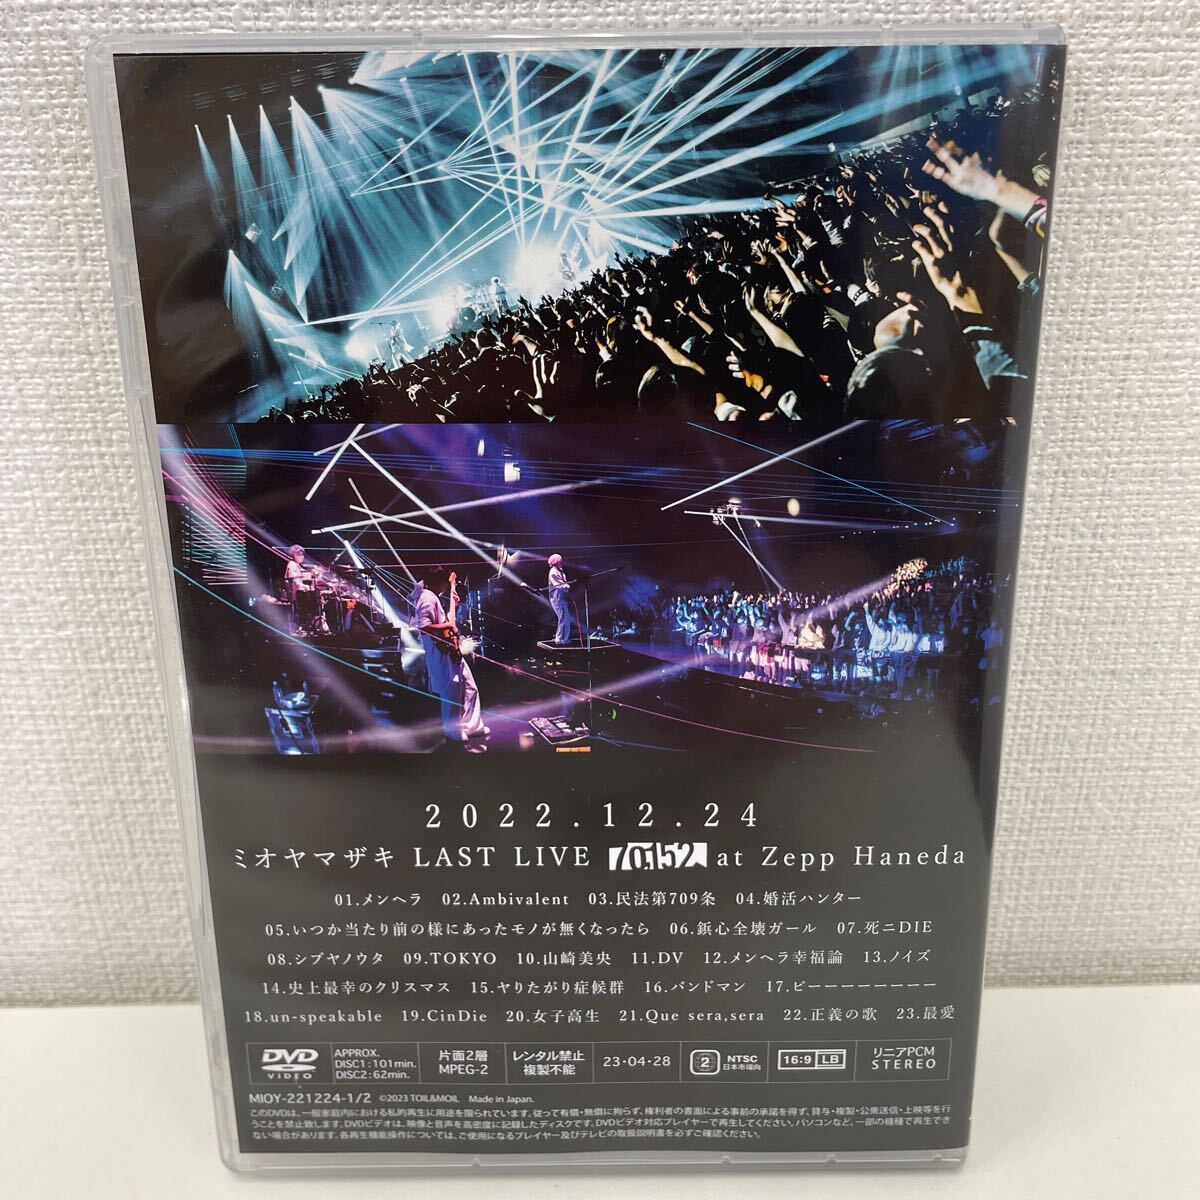 [1 иен старт ] Mio yama The kiLAST LIVE 70152 at Zepp Haneda DVD2 листов комплект MIOYAMAZAKH